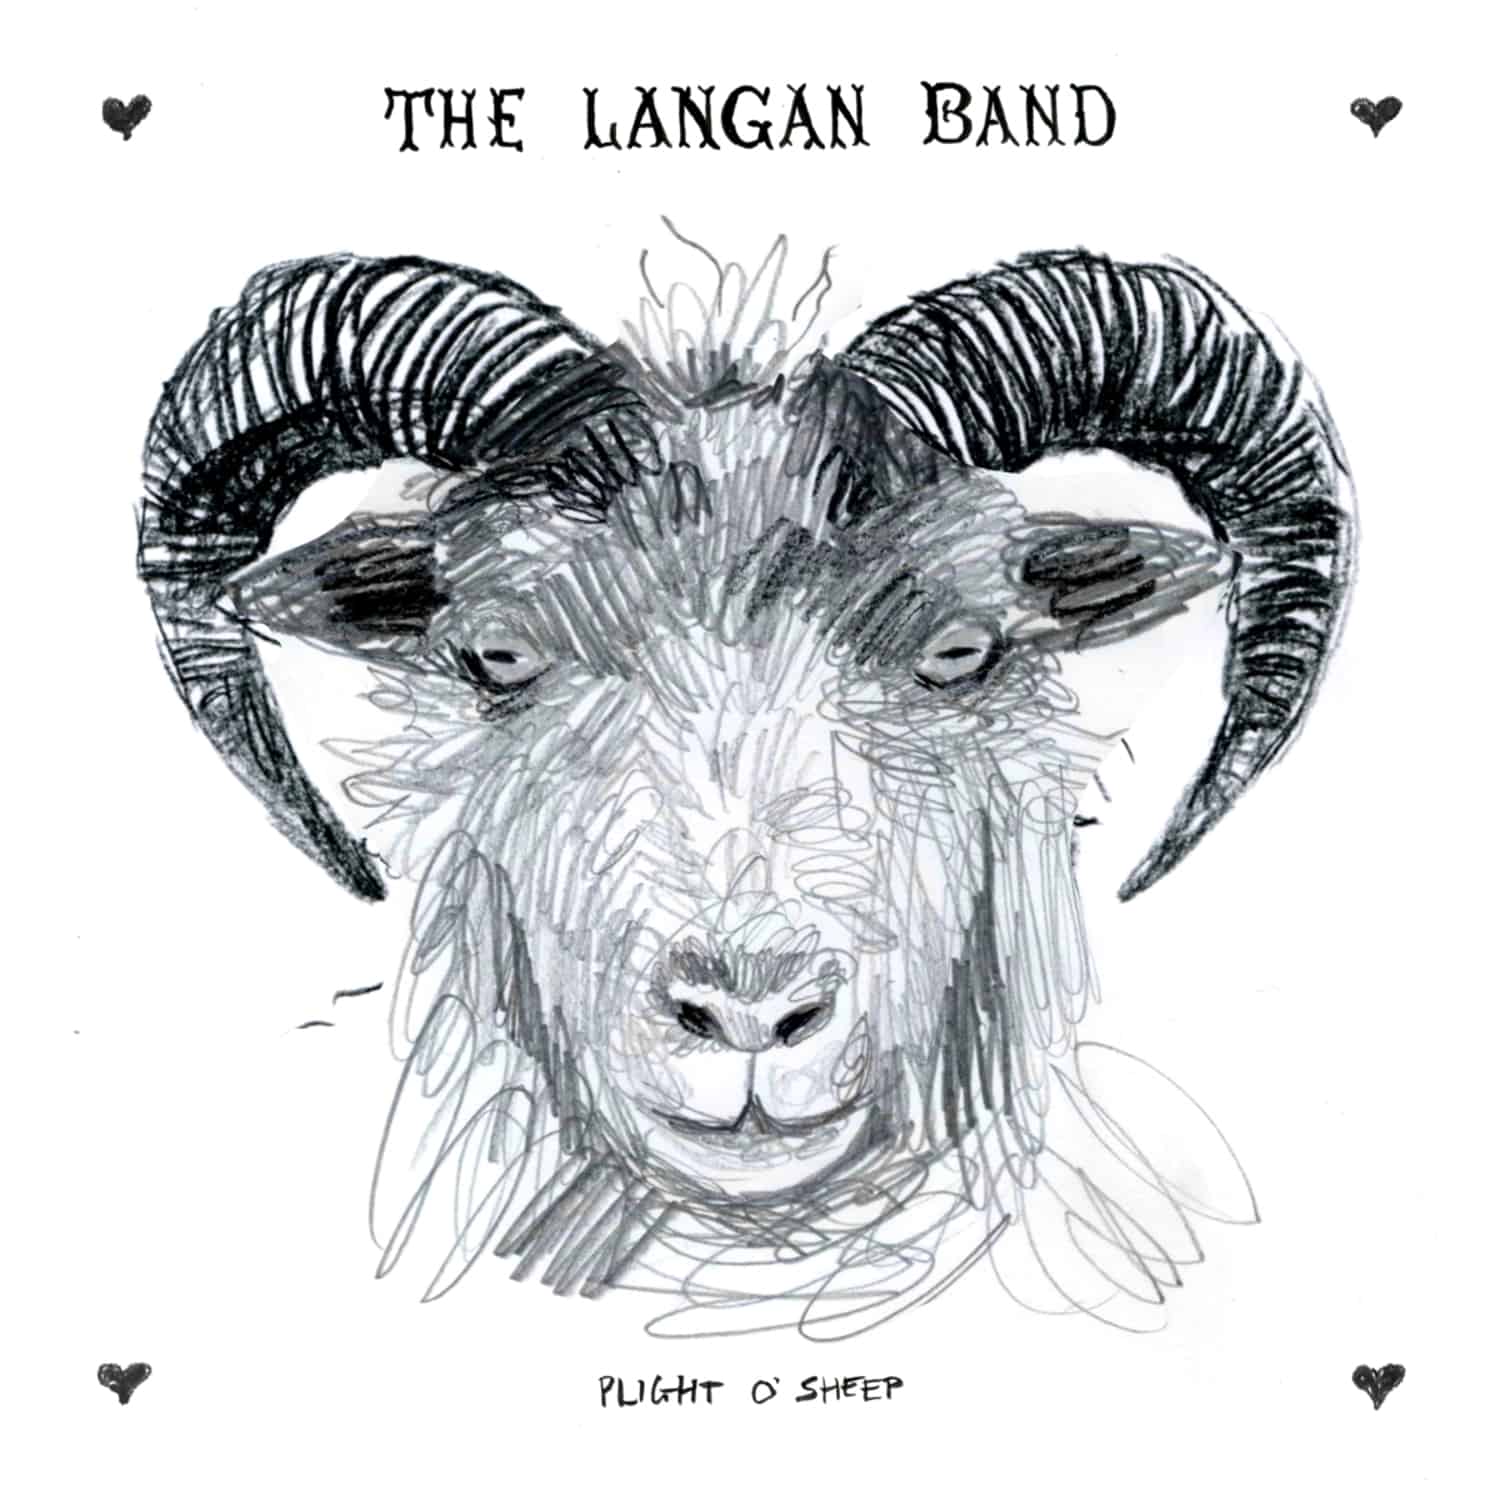 Langan Band - PLIGHT O SHEEP 